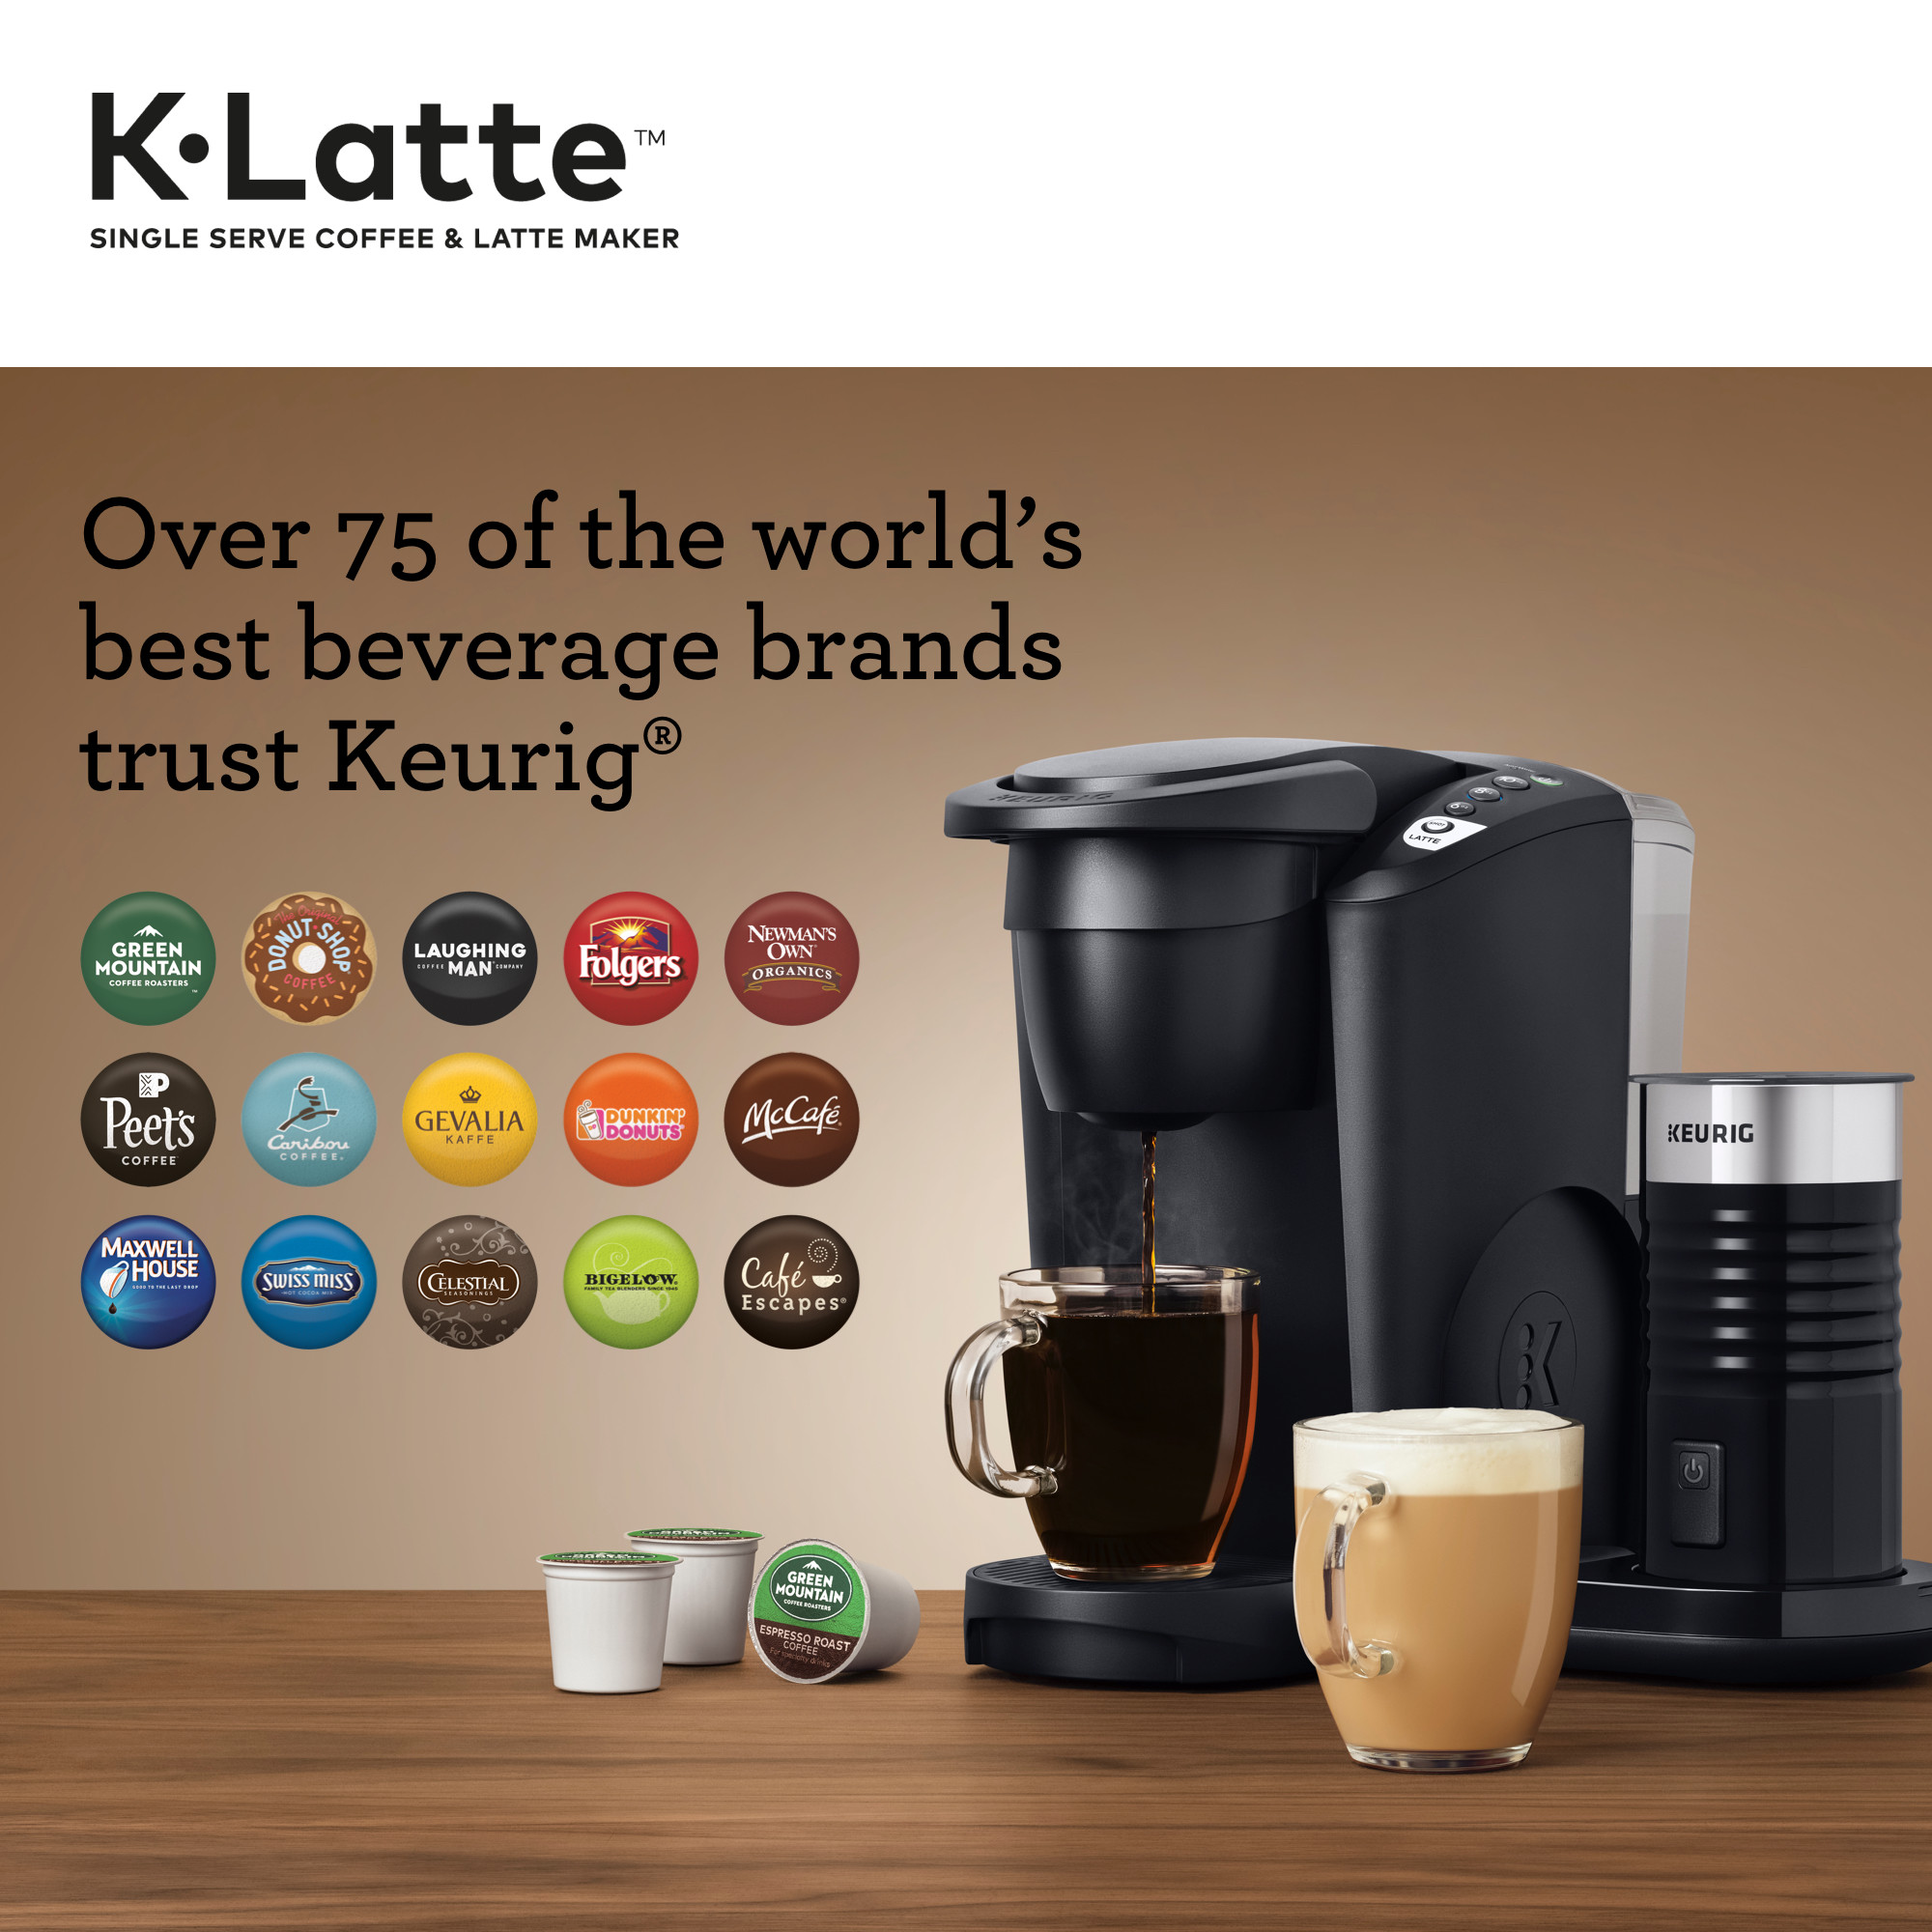 Keurig K-Latte Single Serve K-Cup Coffee and Latte Maker, Black - image 10 of 12